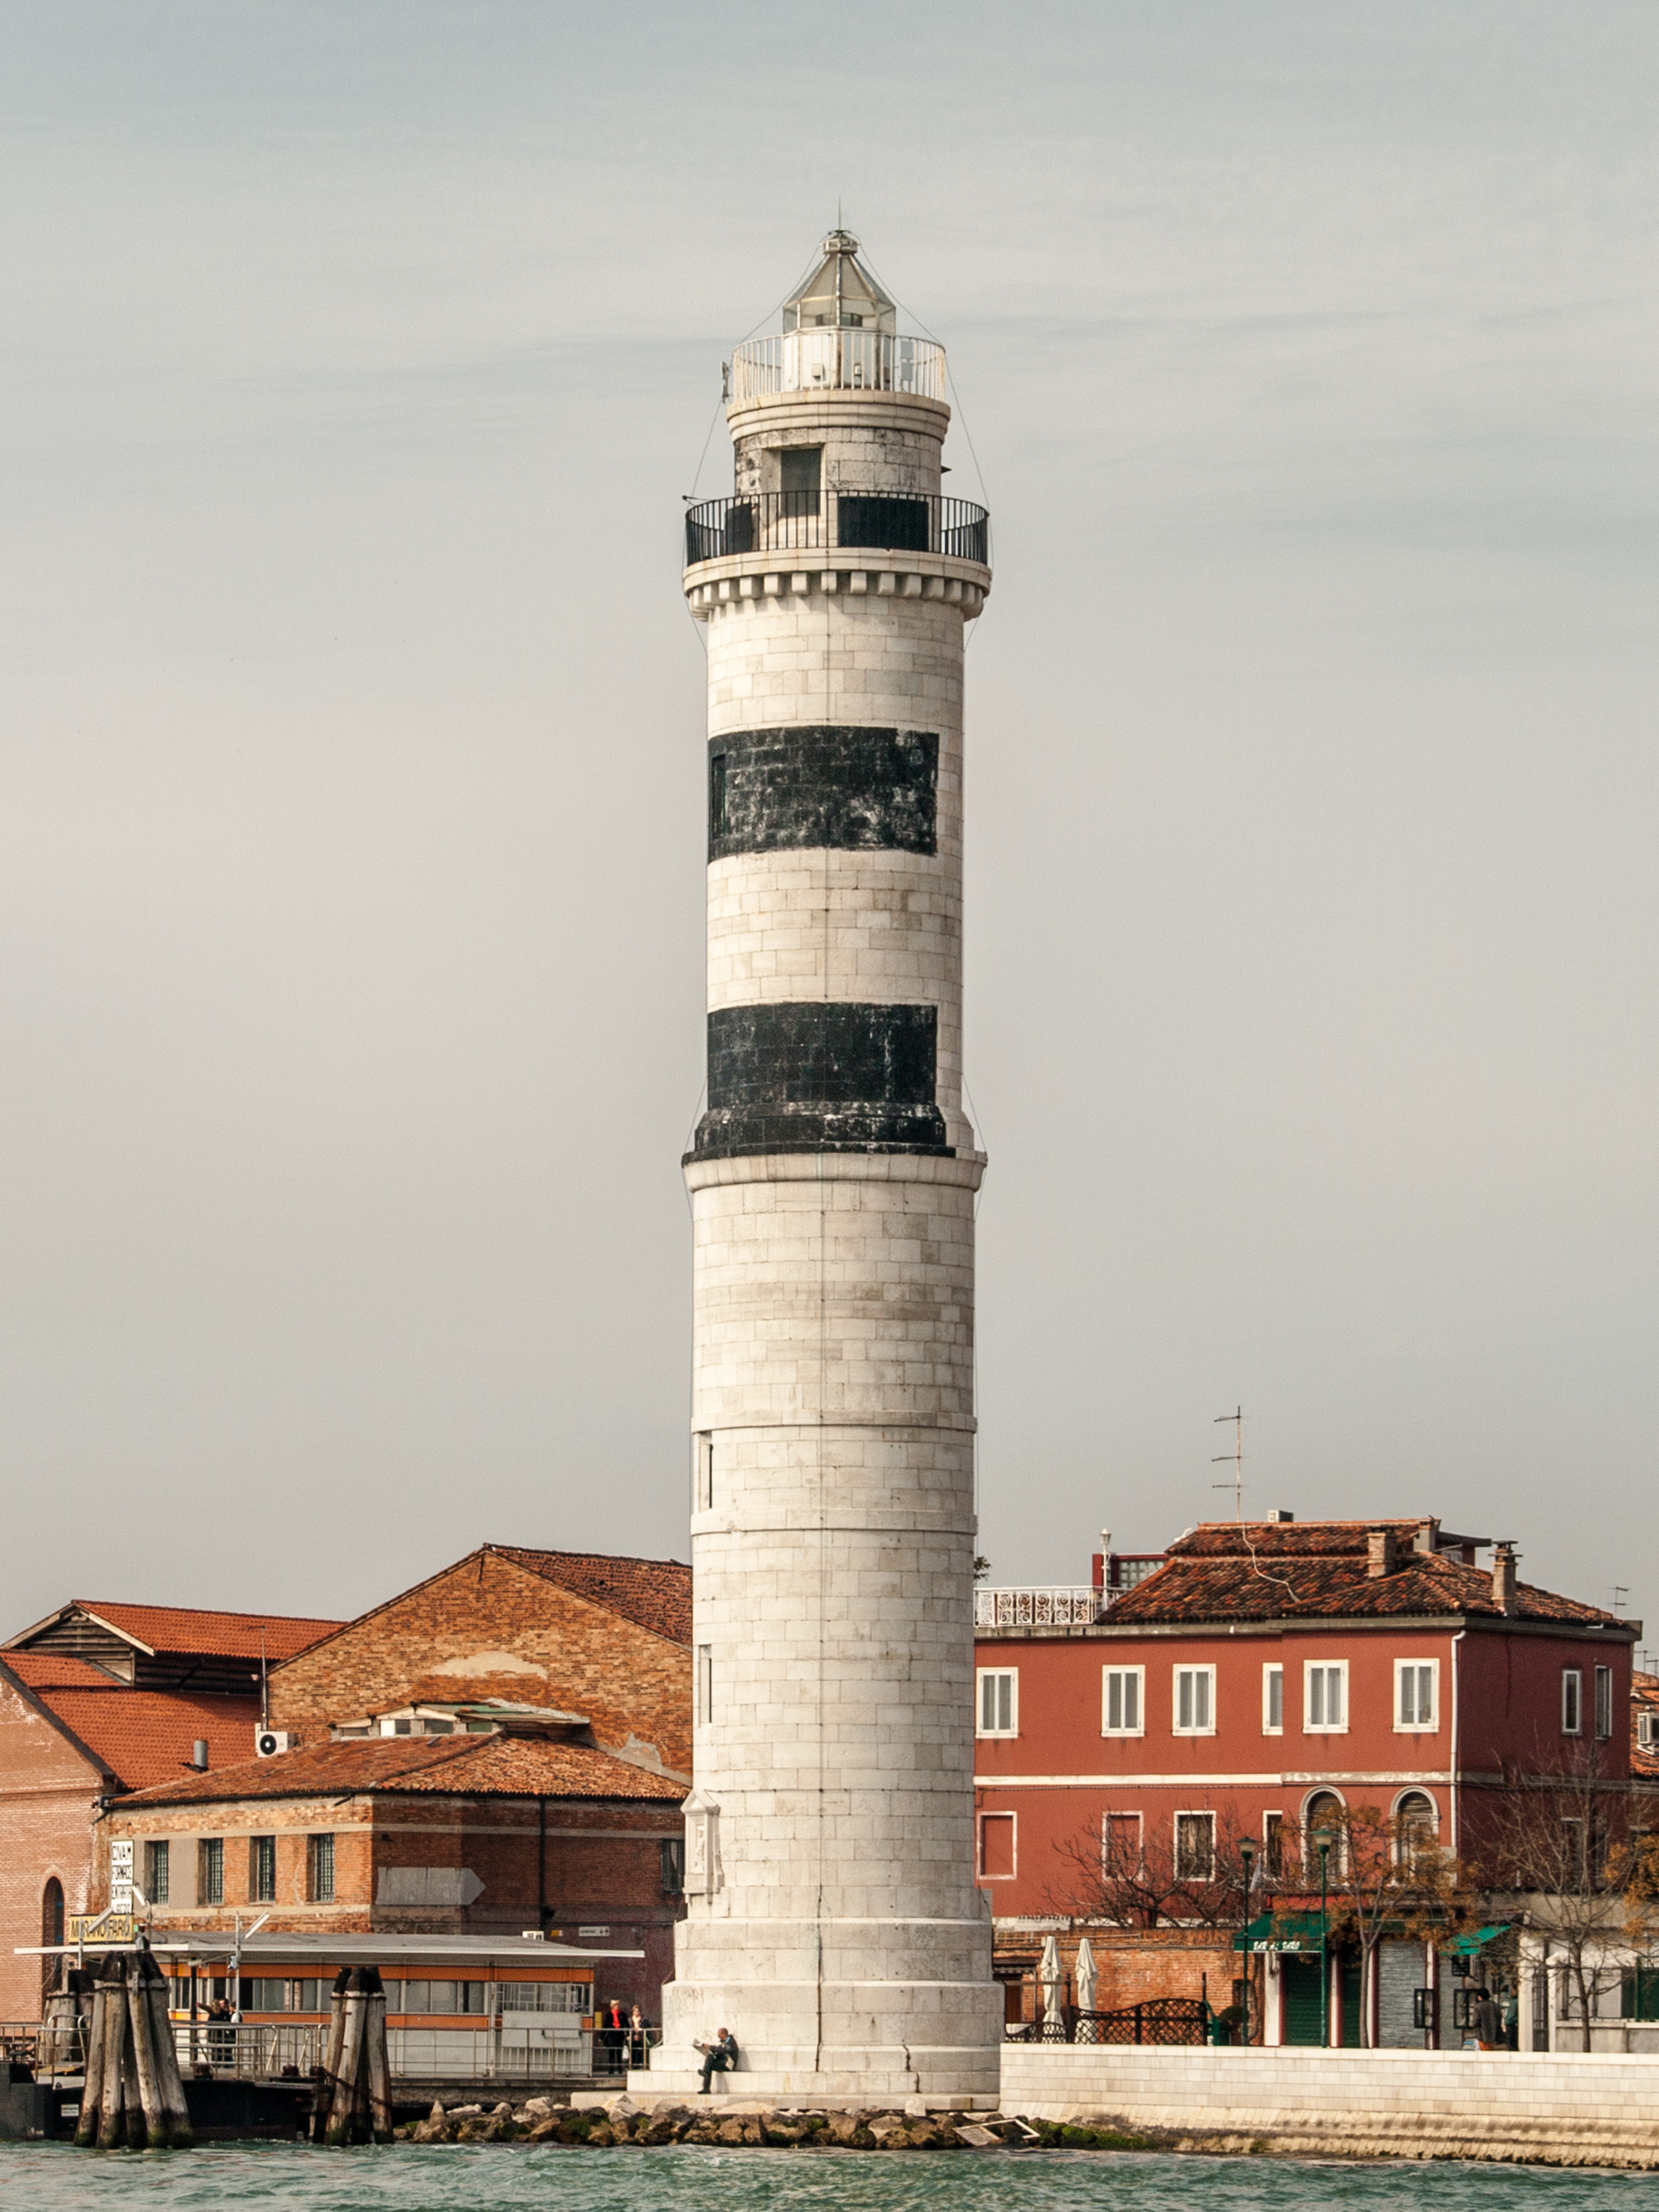 File:Venice-Lighthouse-Murano-3154903.jpg - Wikimedia Commons